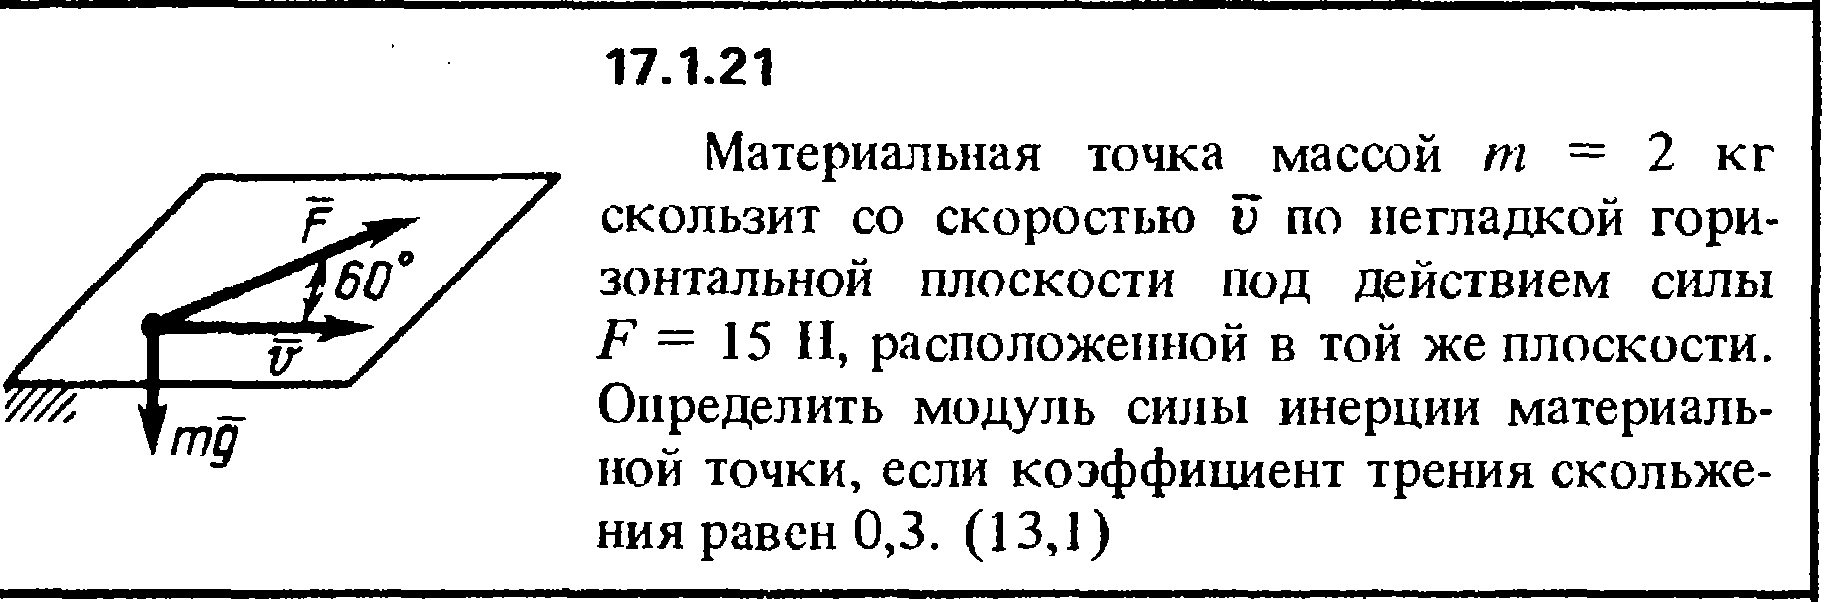 Решение задачи 17.1.21 из сборника Кепе О.Е. 1989 года